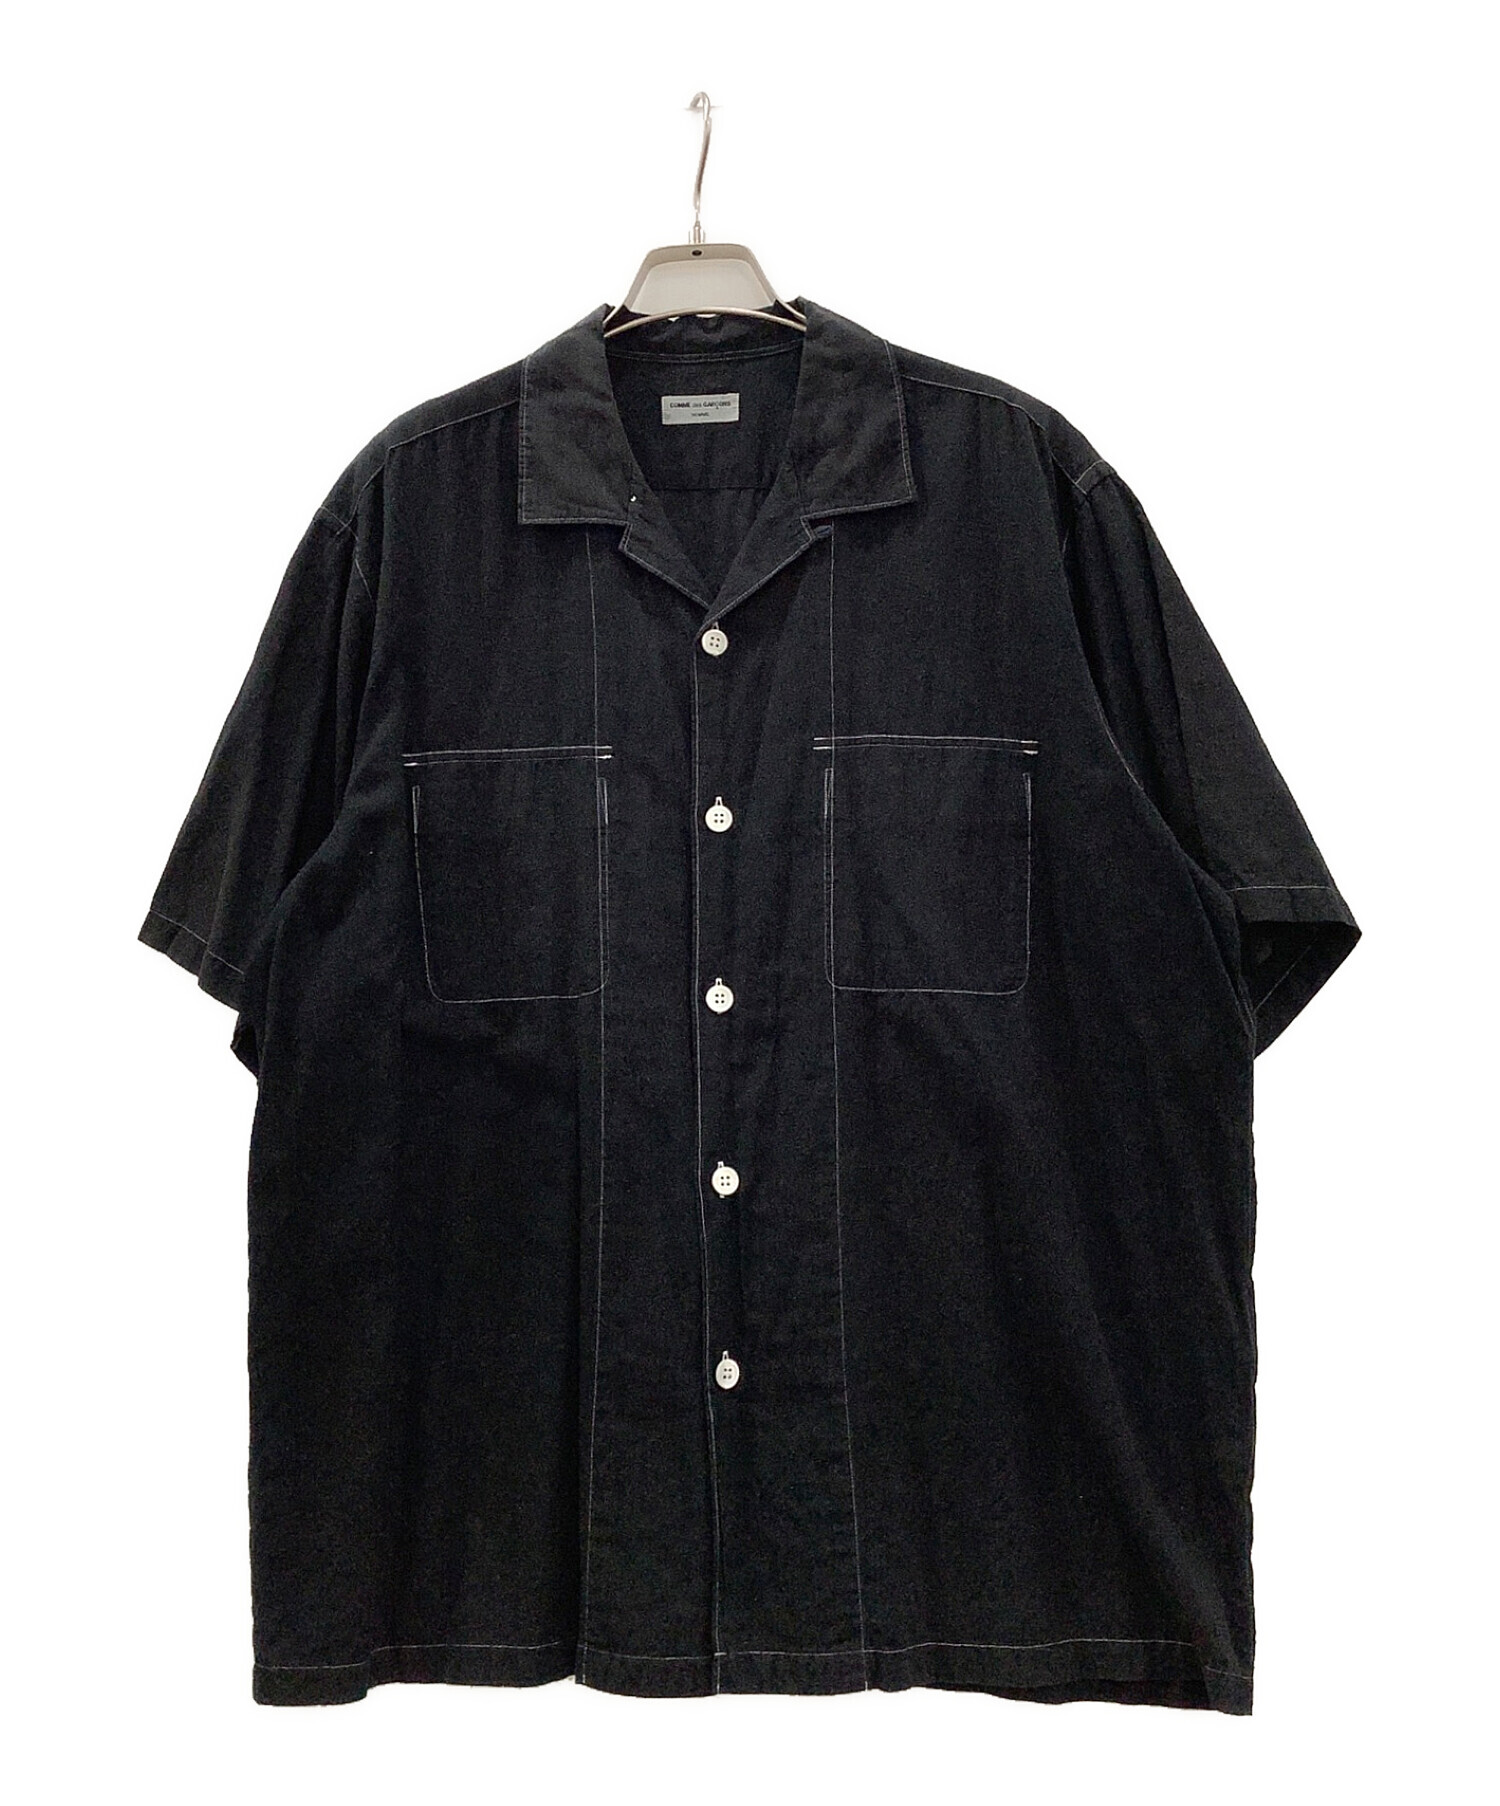 COMME des GARCONS HOMME (コムデギャルソン オム) オープンカラーシャツ ブラック サイズ:印字不鮮明